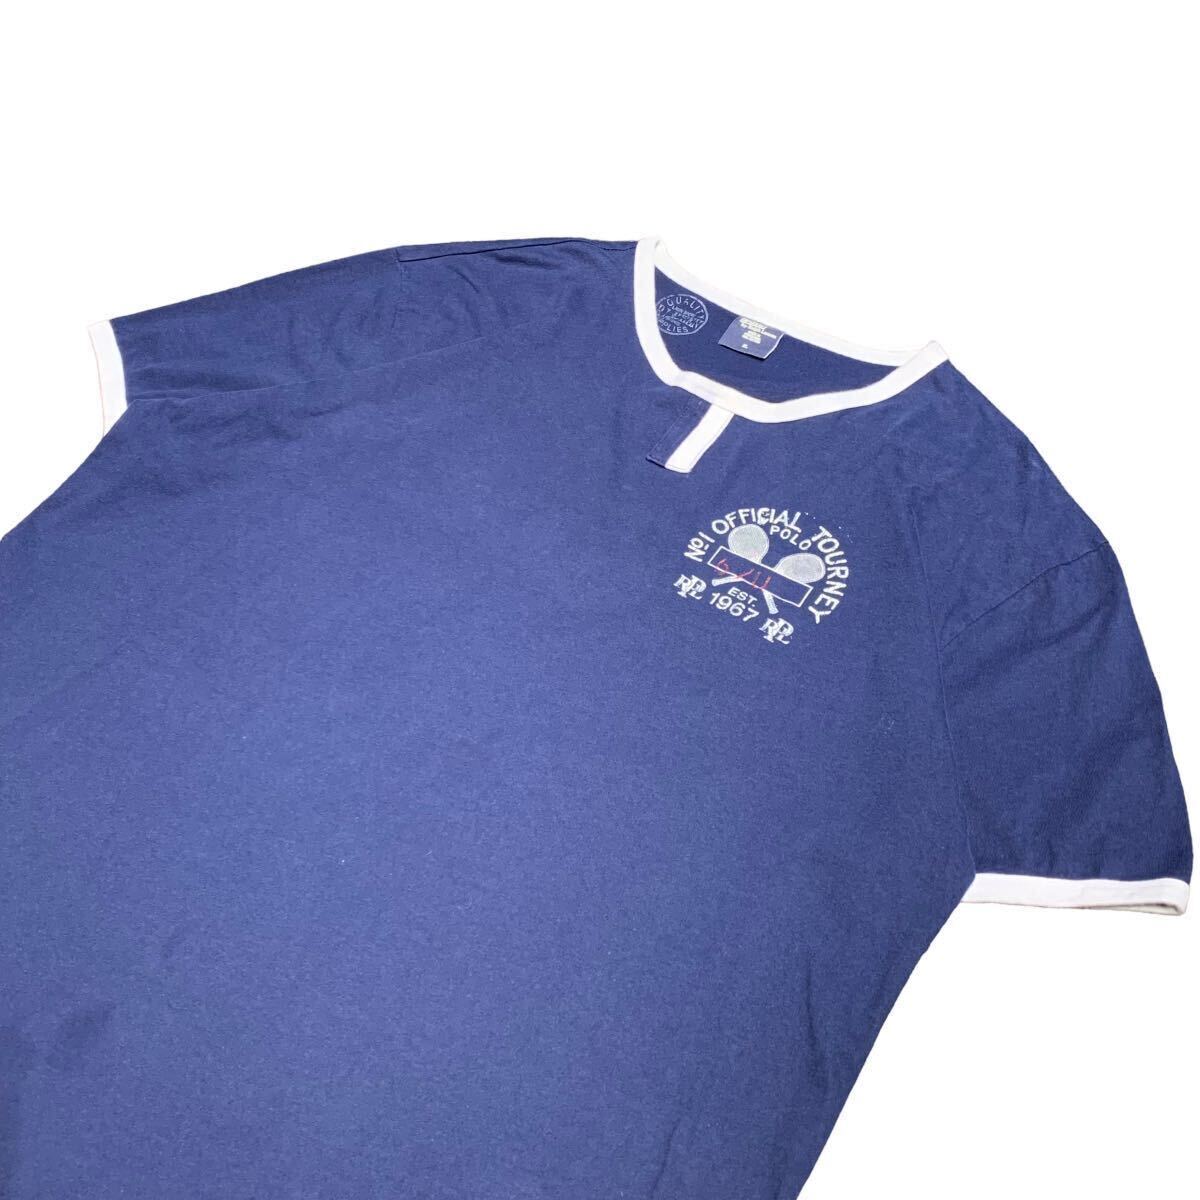 1990s Ralph Lauren Lynn ga- футболка шоко подбородок stencil футболка короткий рукав б/у одежда 1990 годы 90s vintage Vintage Vintage 